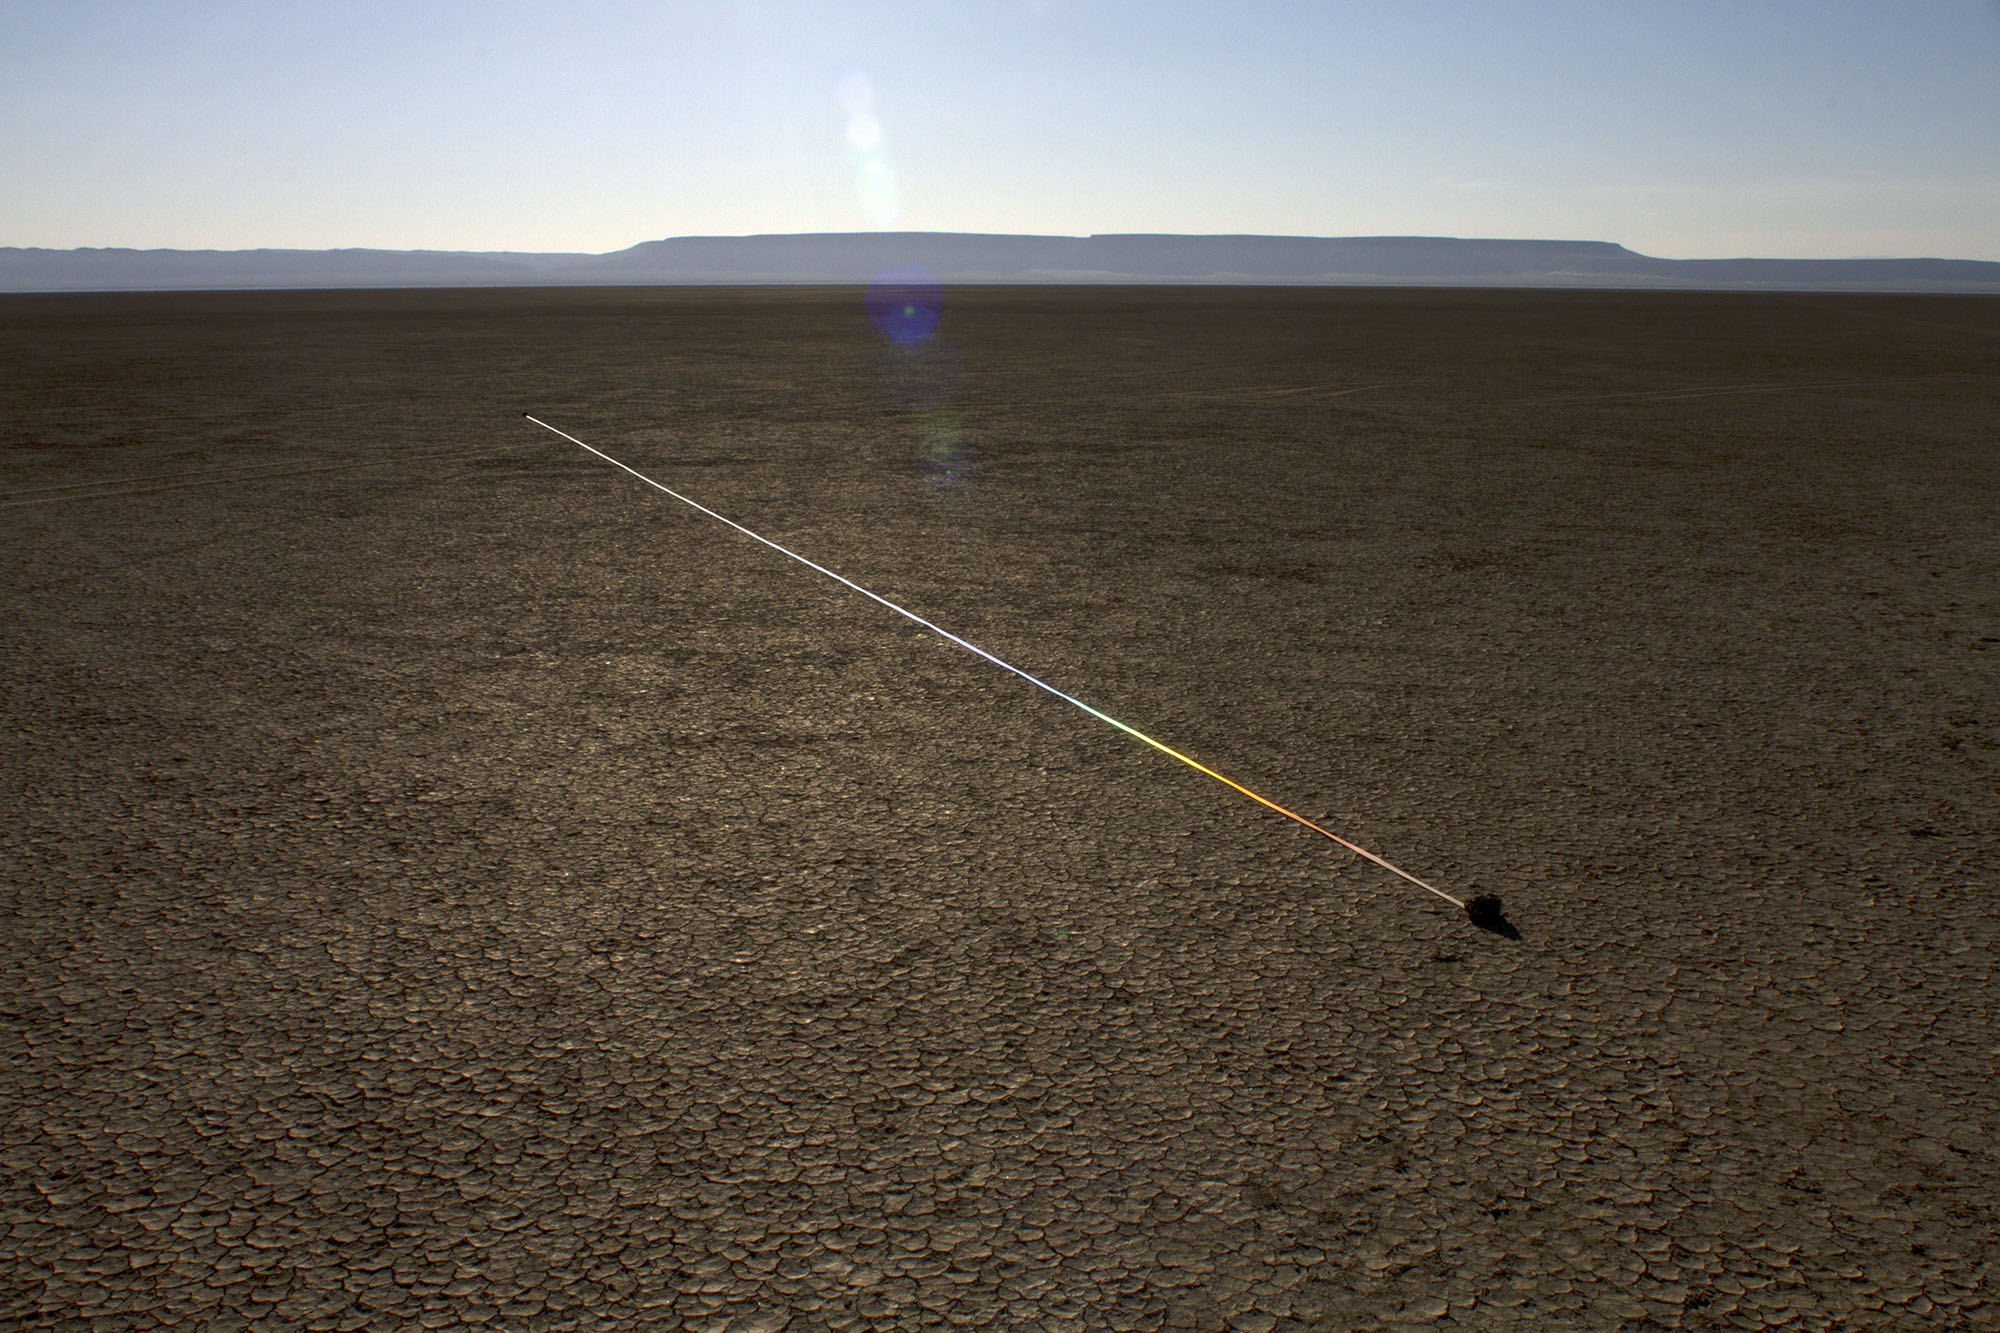    marking time in light  ,&nbsp;2014 reflective fabric tape, found stones, natural light 8.5 x 1.5 x 1494 in. image credit |&nbsp; Ian Clark   Alvord Desert, Eastern Oregon 